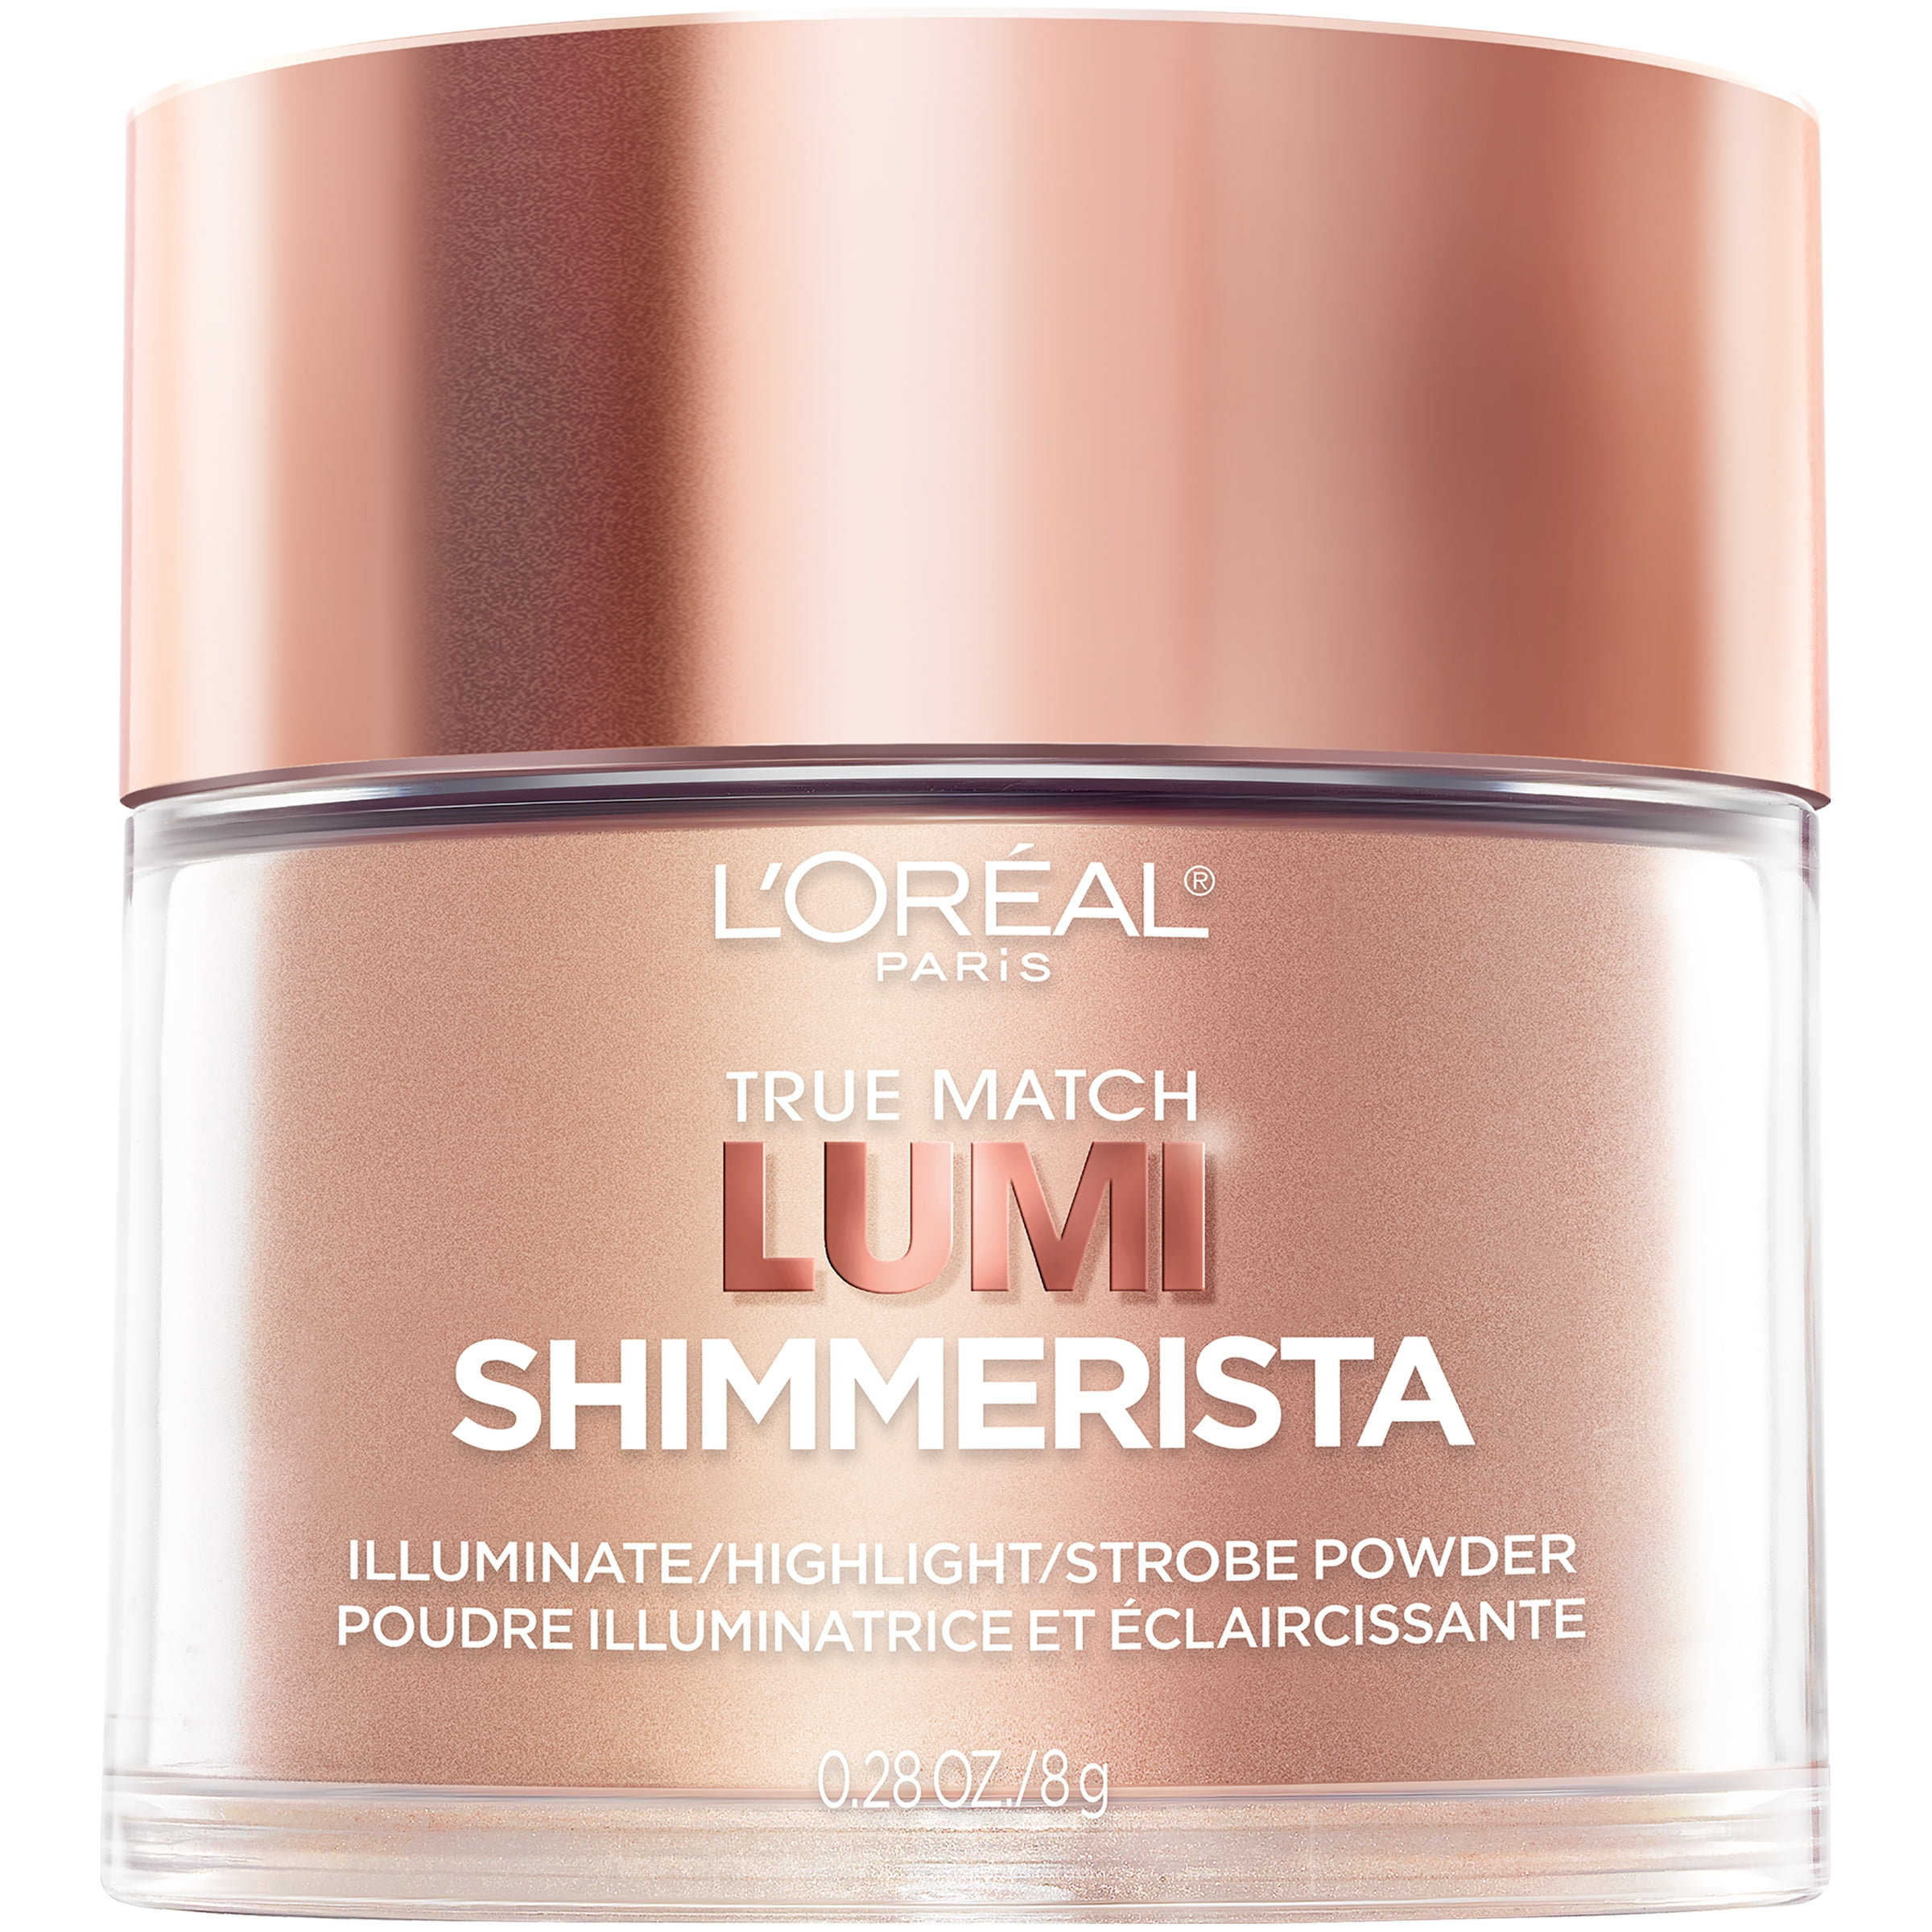 L'Oreal True Match Lumi Highlighting Powder, Sunlight, 0.28 oz. - Walmart.com